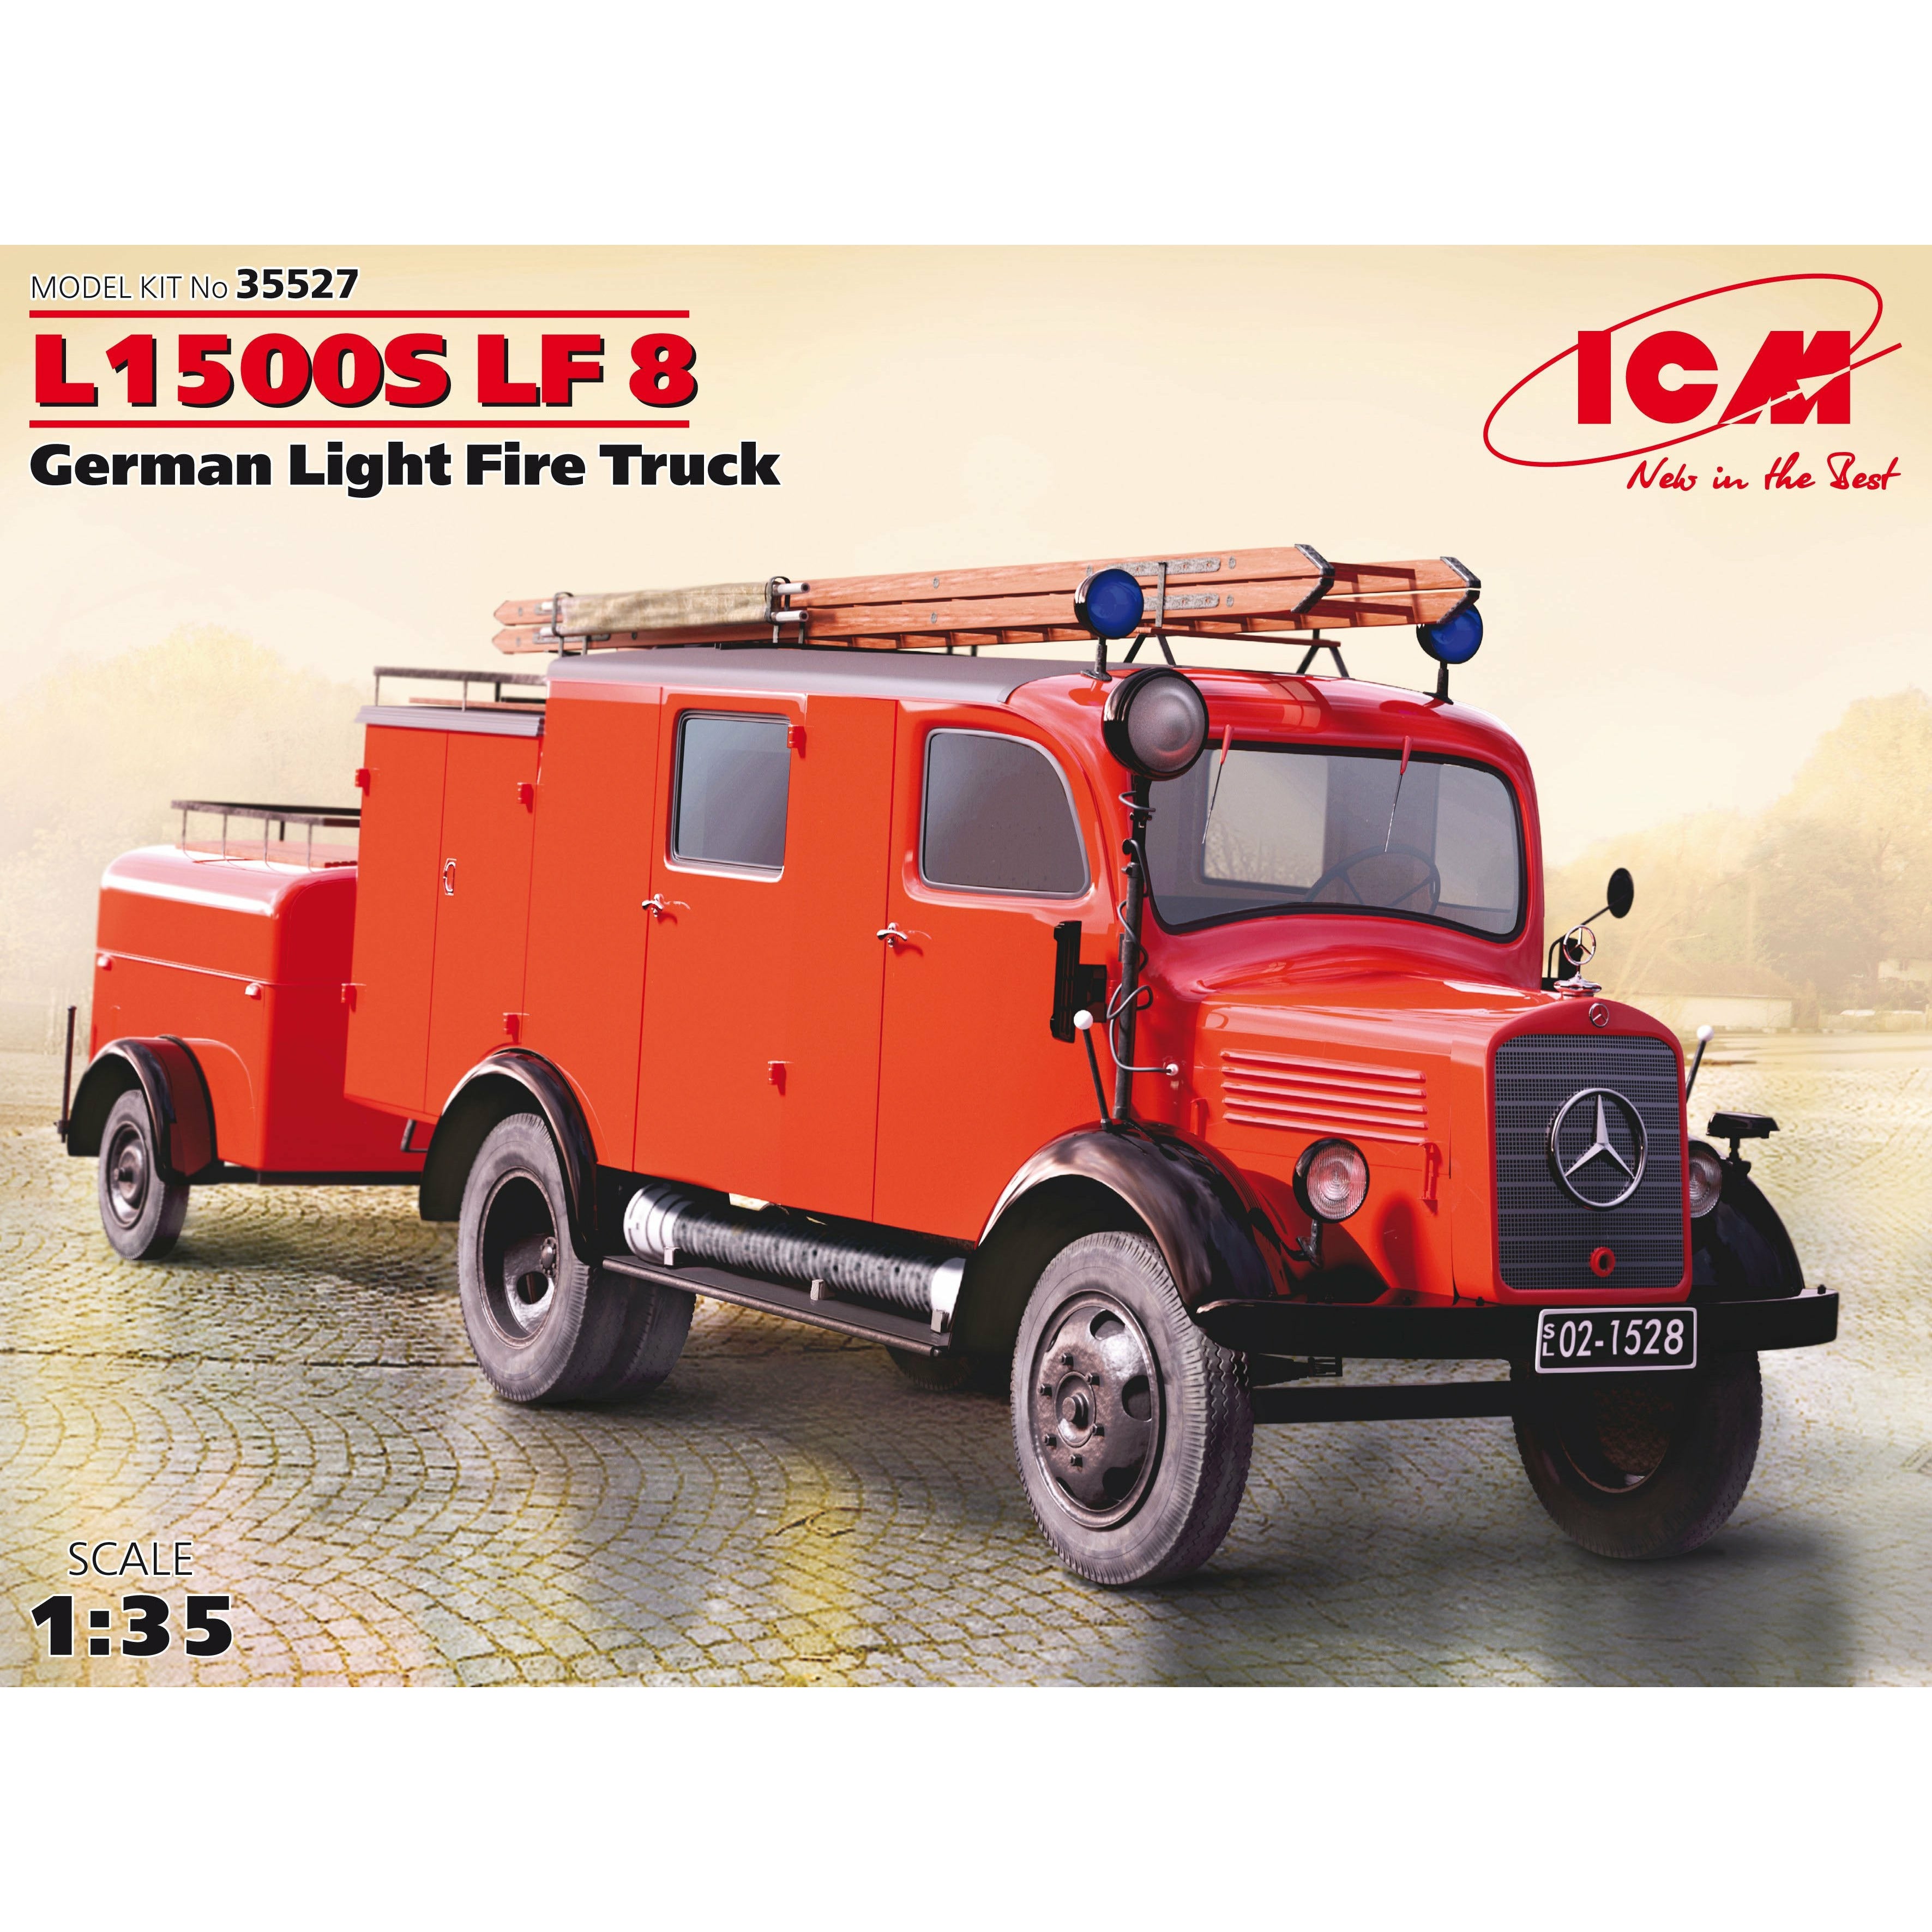 L1500S LF 8, German Light Fire Truck 1/35 #35527 by ICM